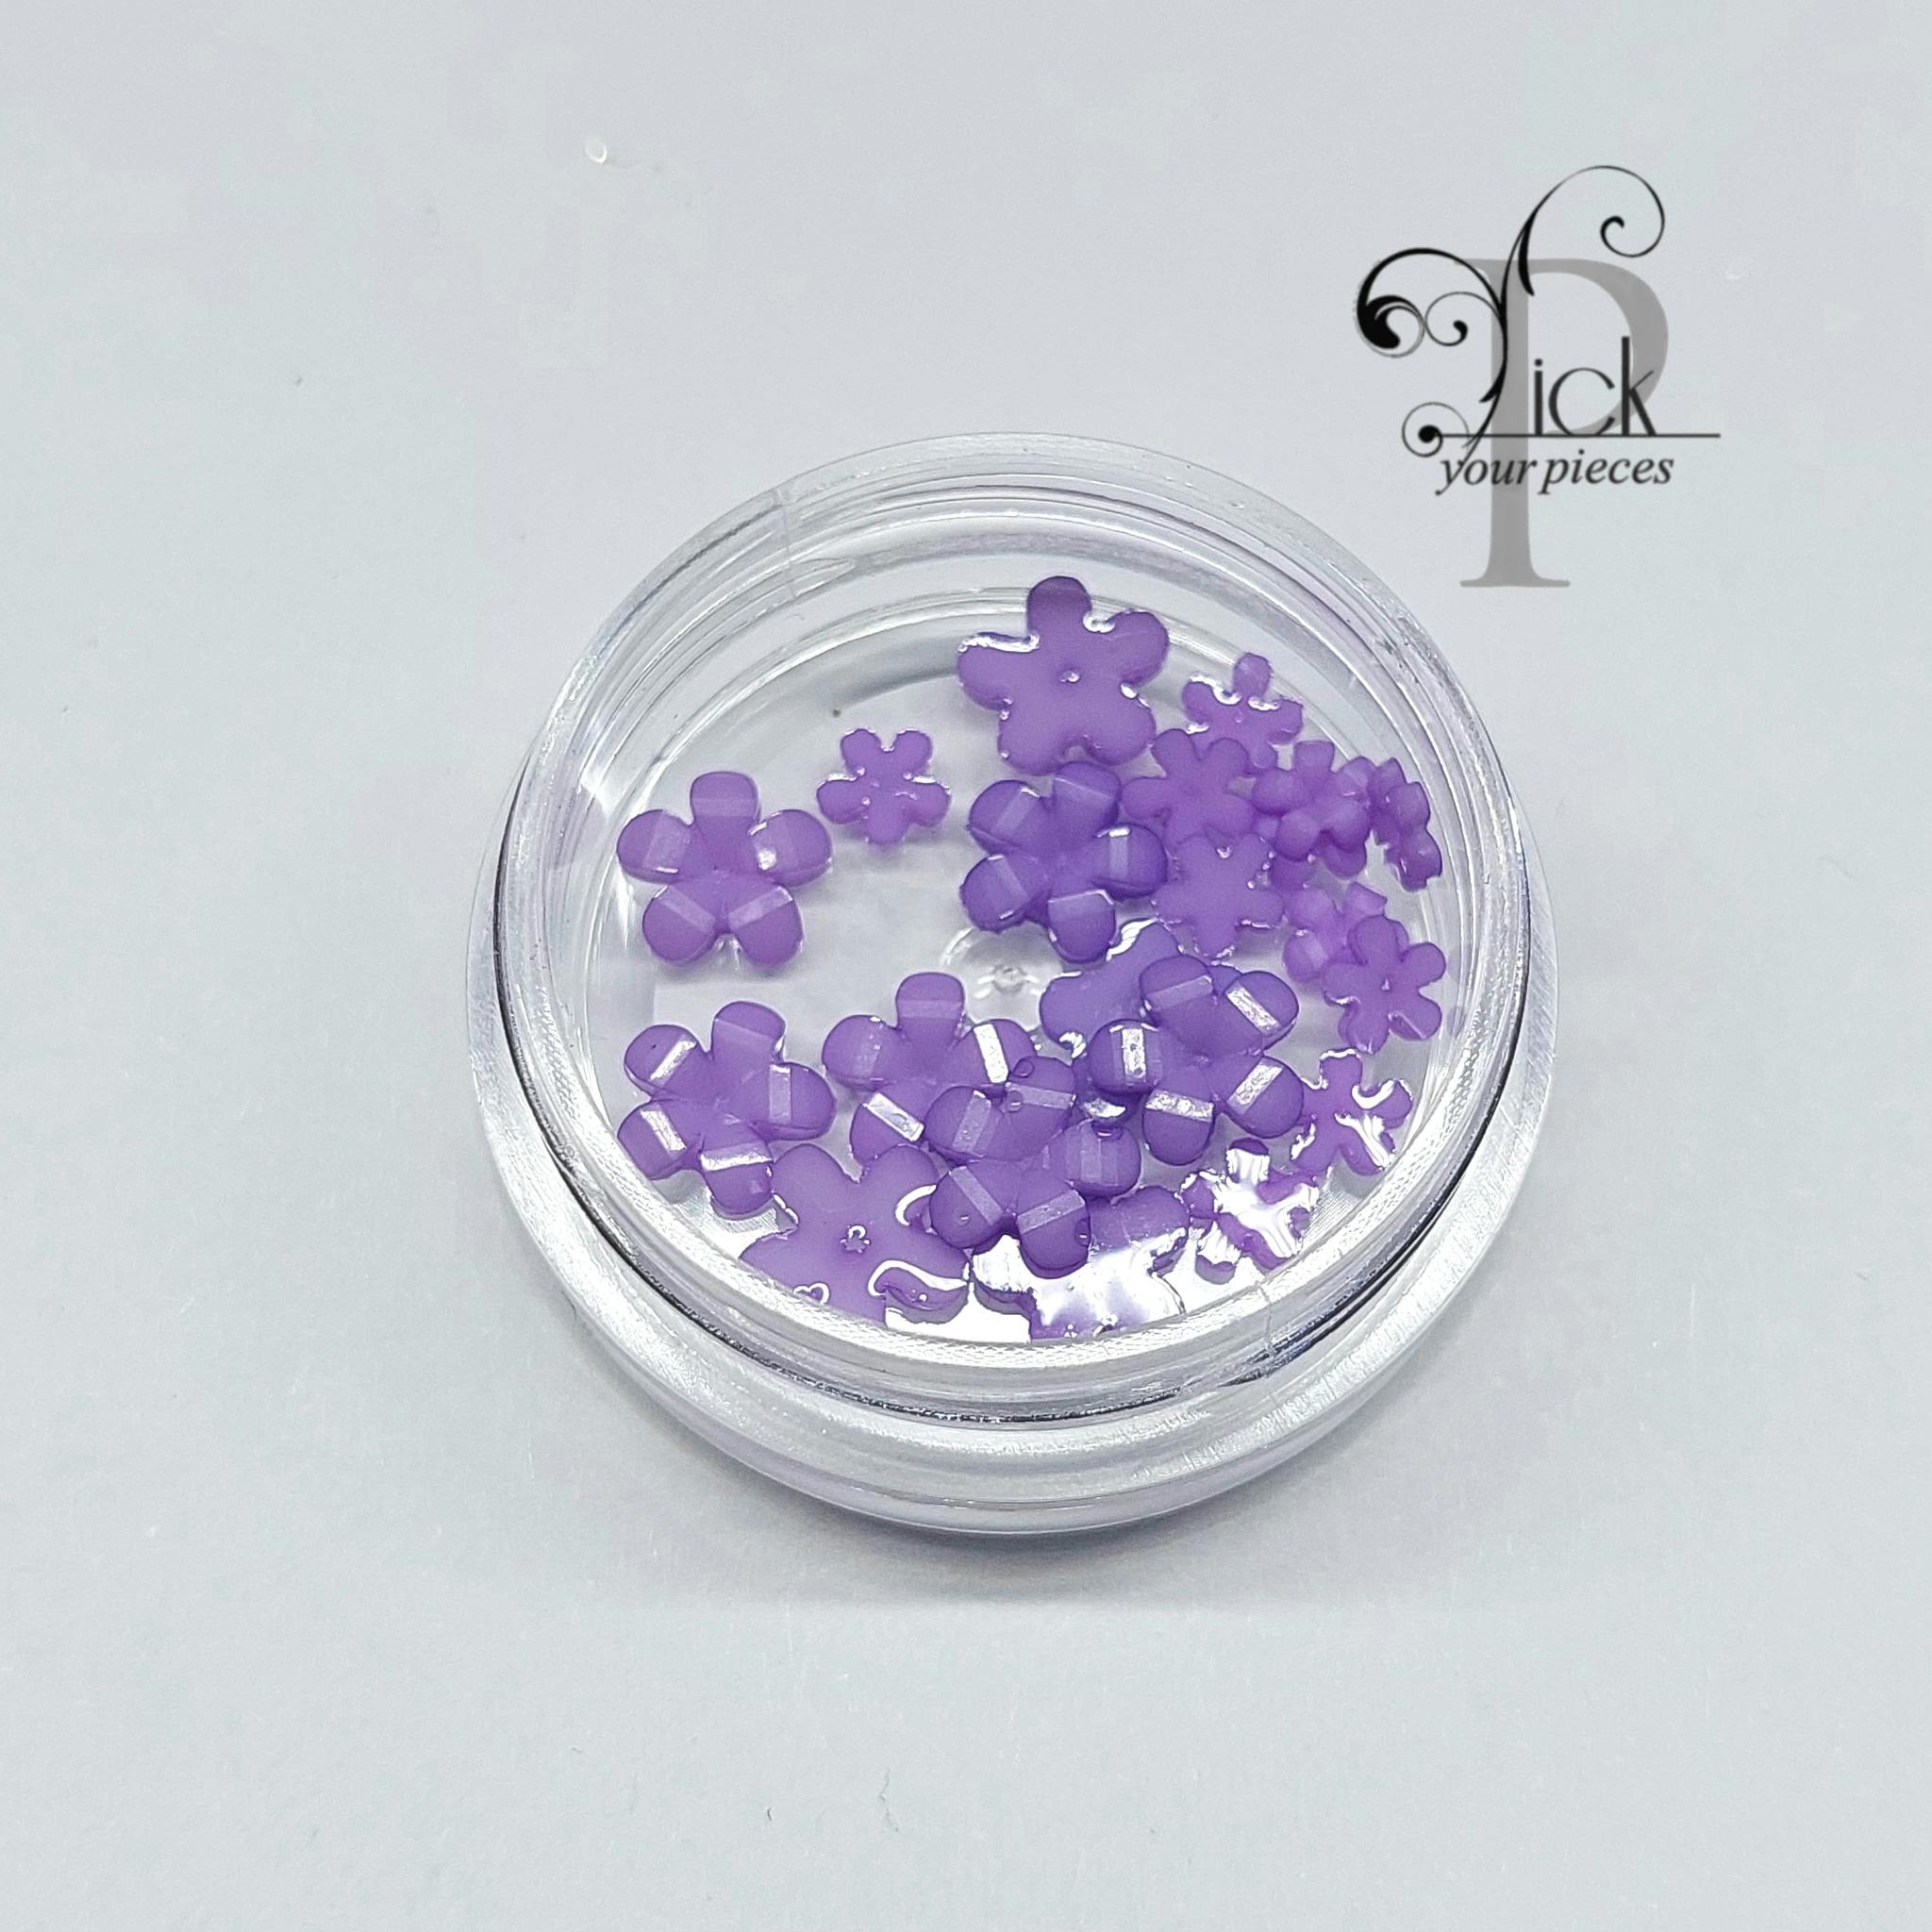 3D Lilly Flower Purple